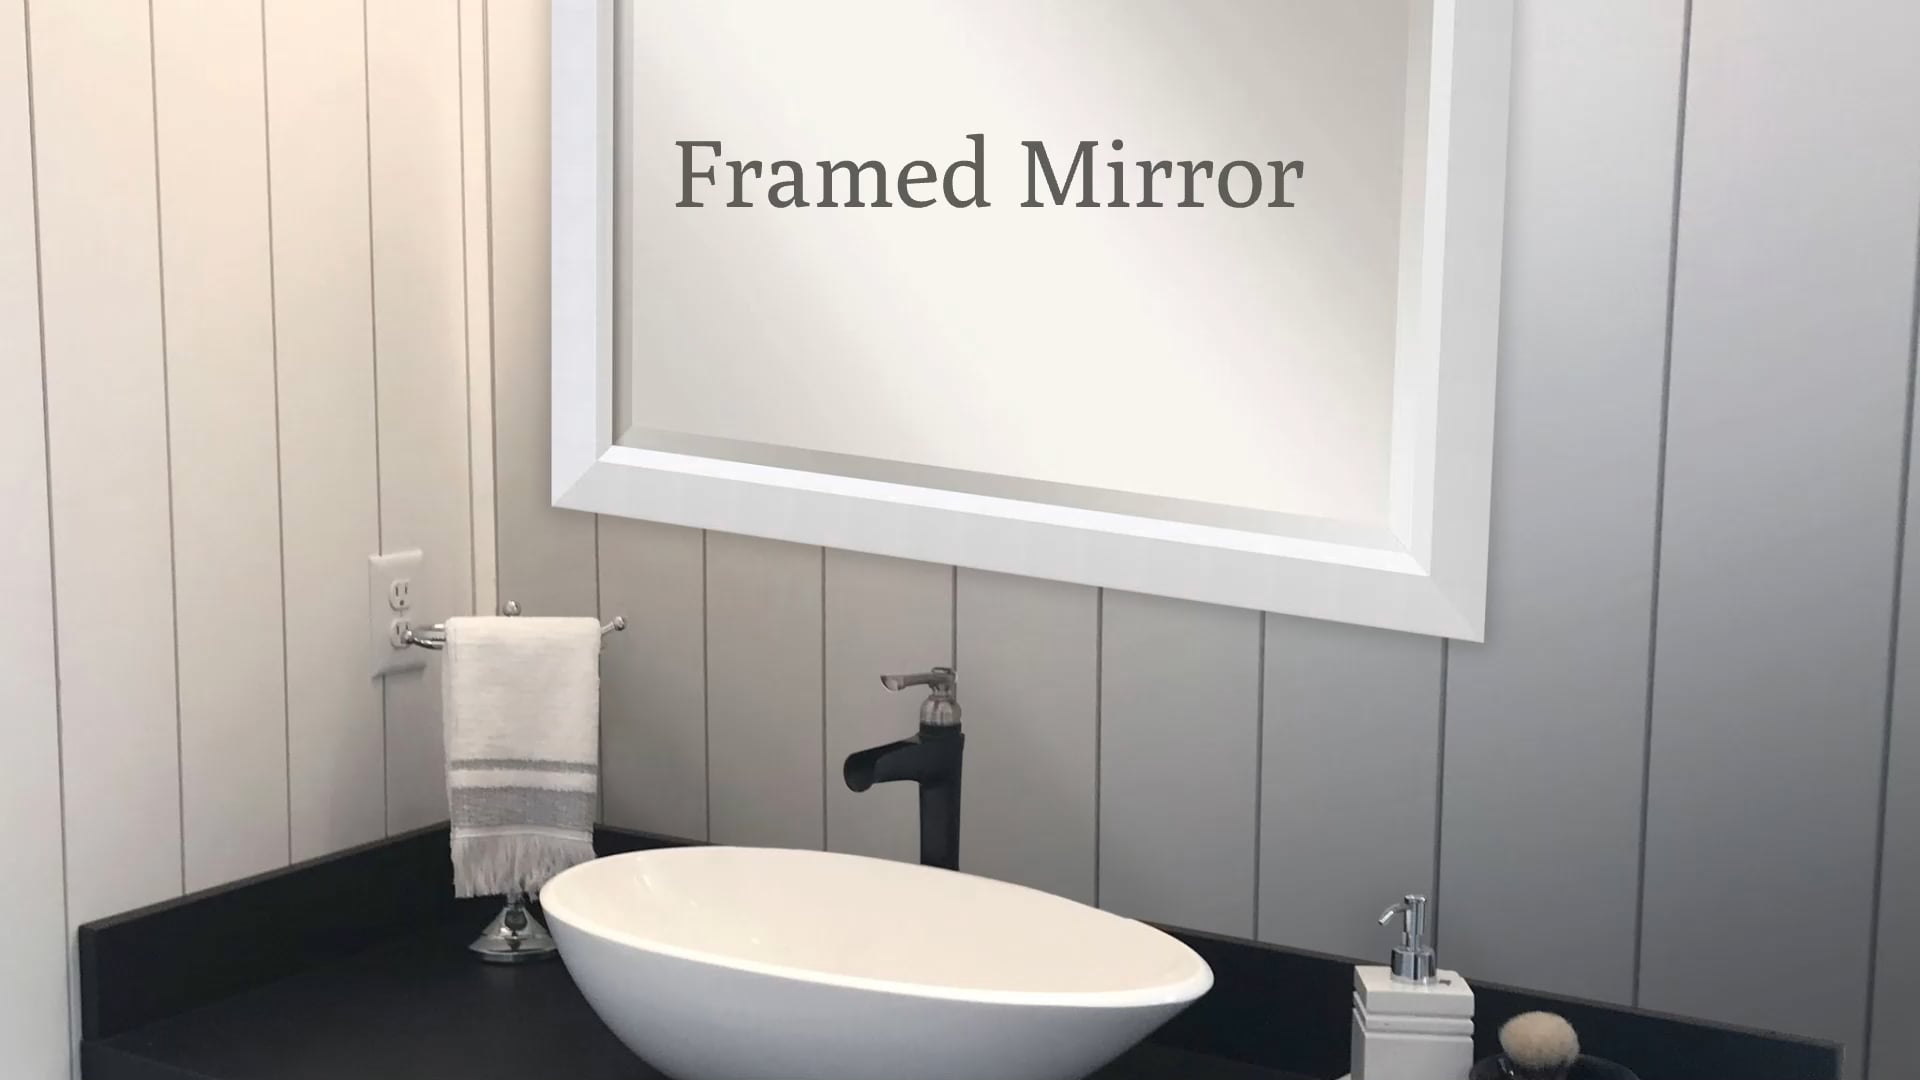 Corvino White Beveled Wood Bathroom Wall Mirror - 23 x 29 in.